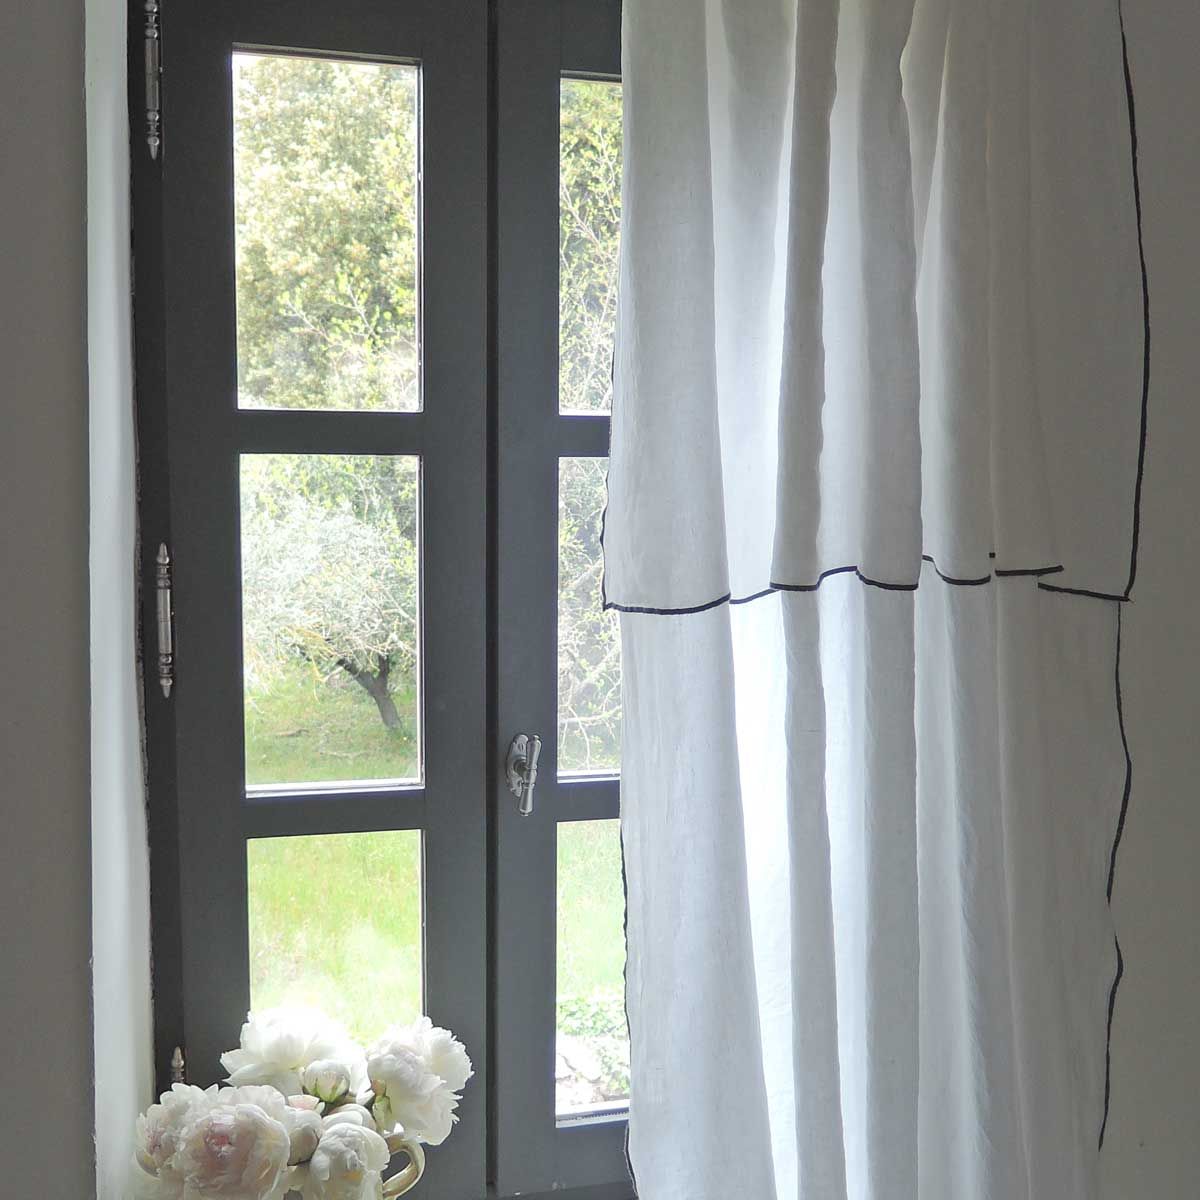 Armarios con cortinas: 25 diseños para inspirarte